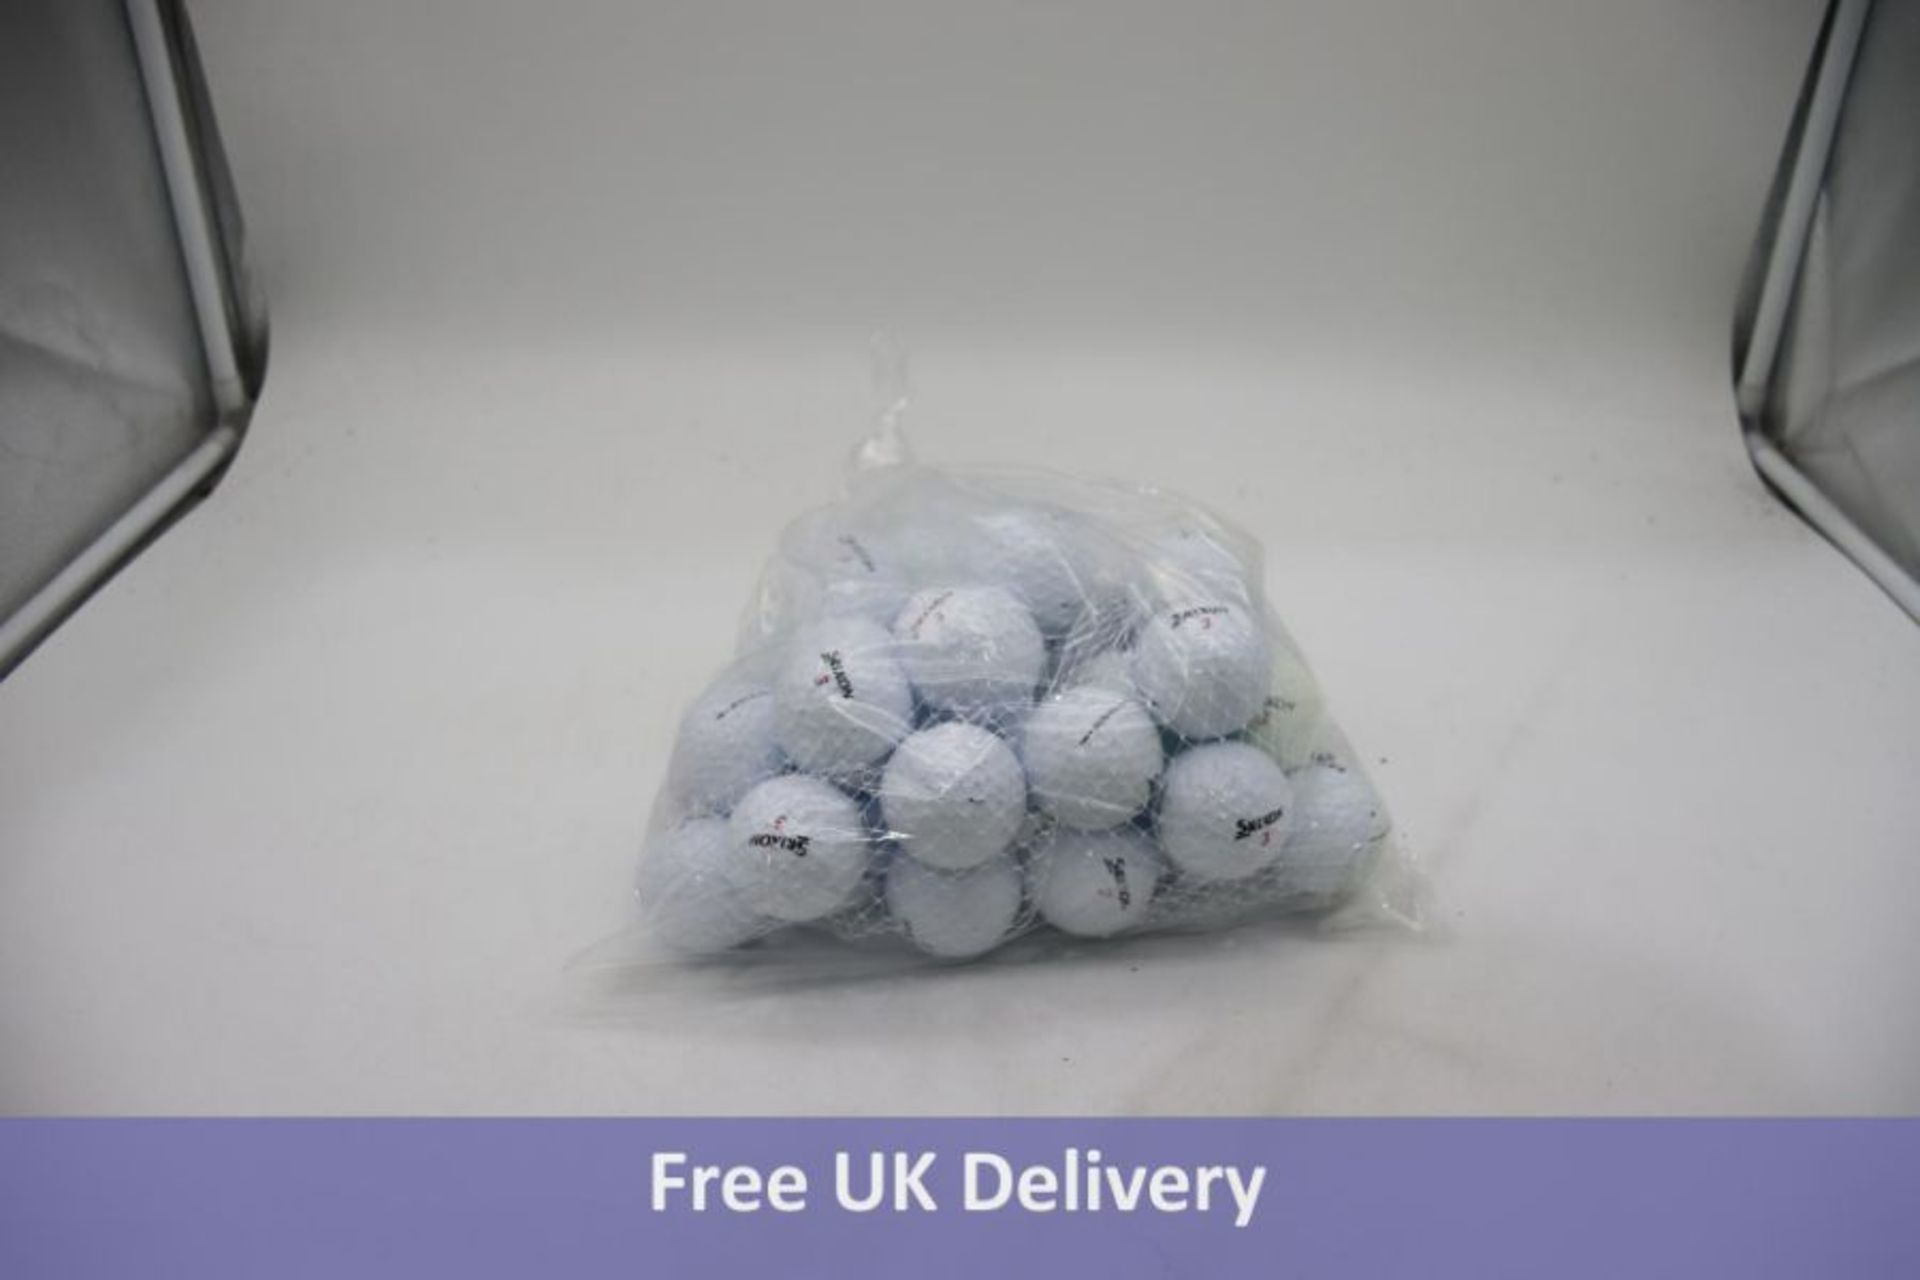 Three packs of Srixon 3 Distance Golf Balls, White, 12 Balls in each